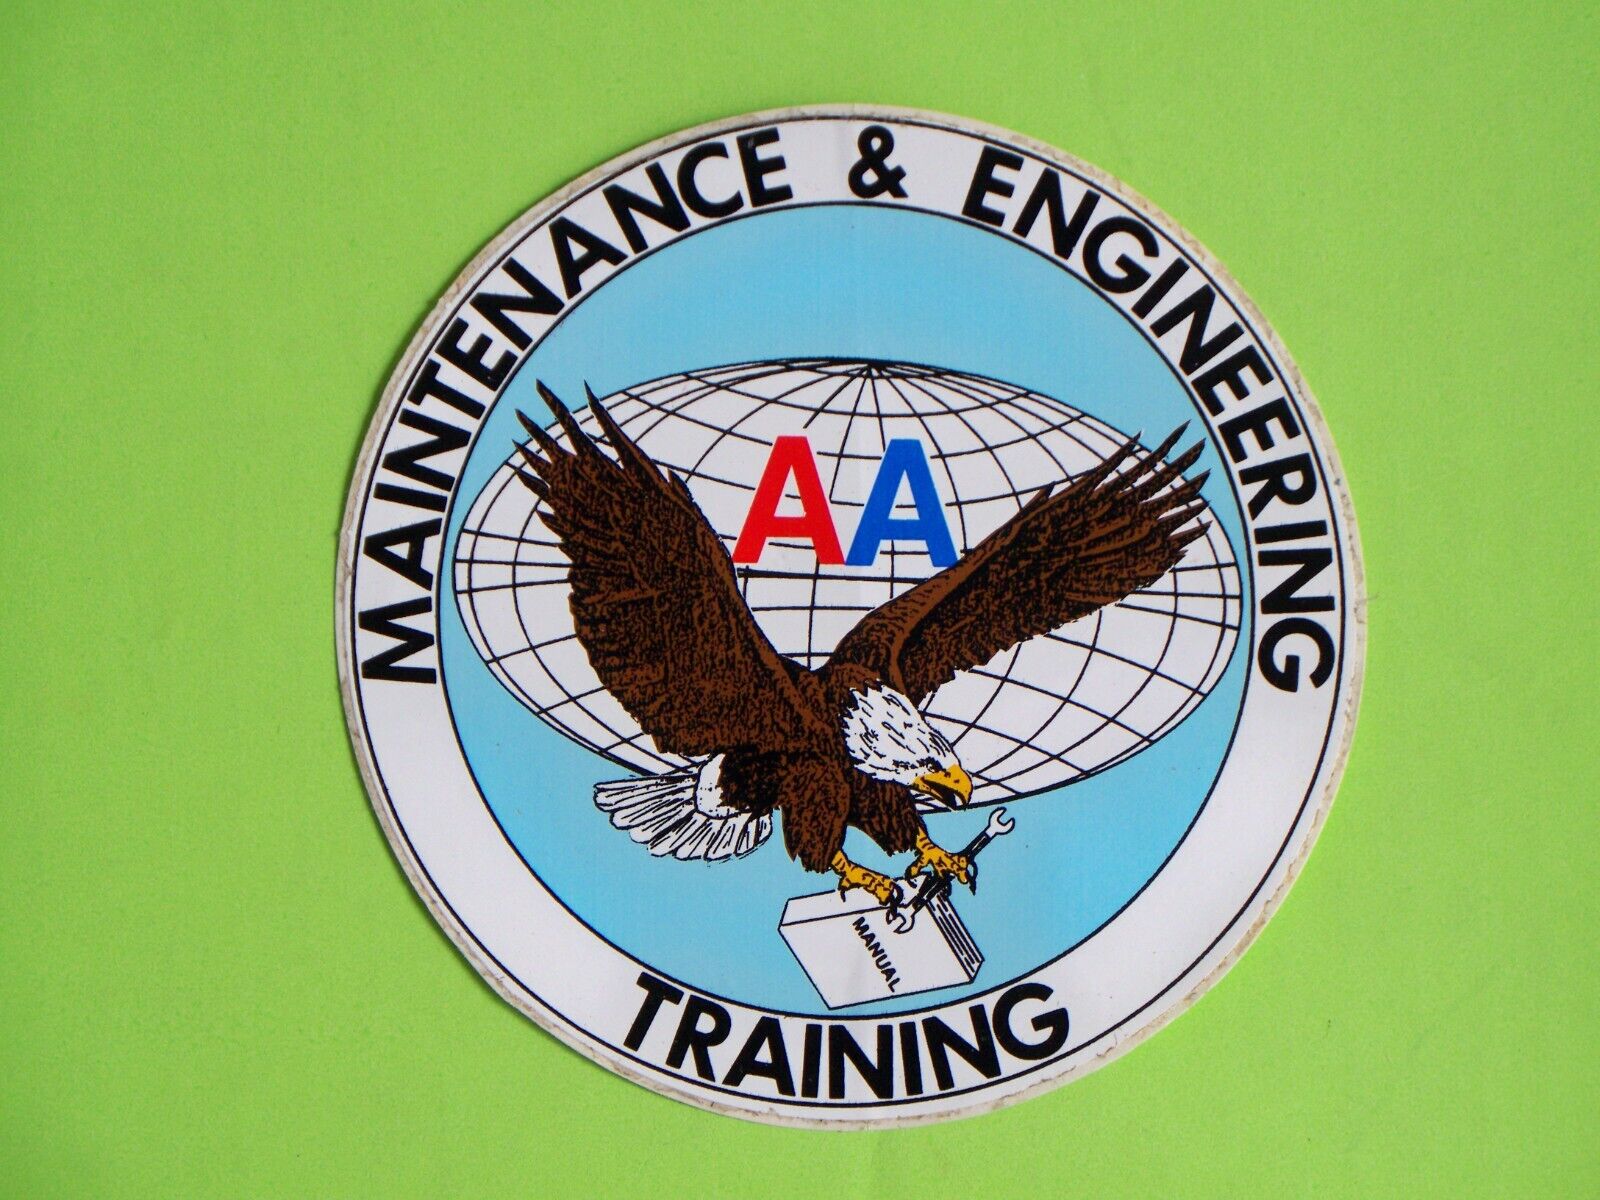 Vintage Vinyl American Airlines Maintenance & Engineering Training Sticker